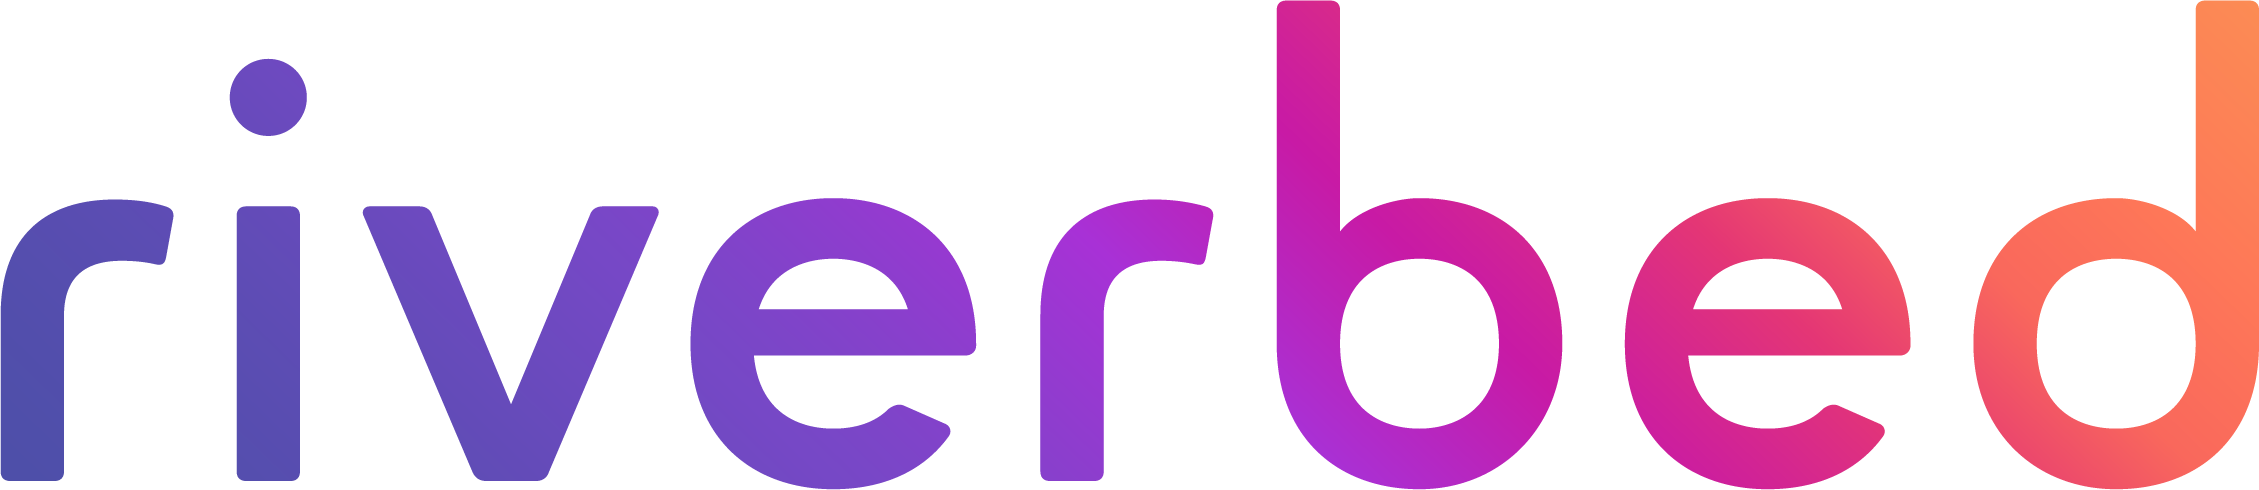 riverbed-logo.png